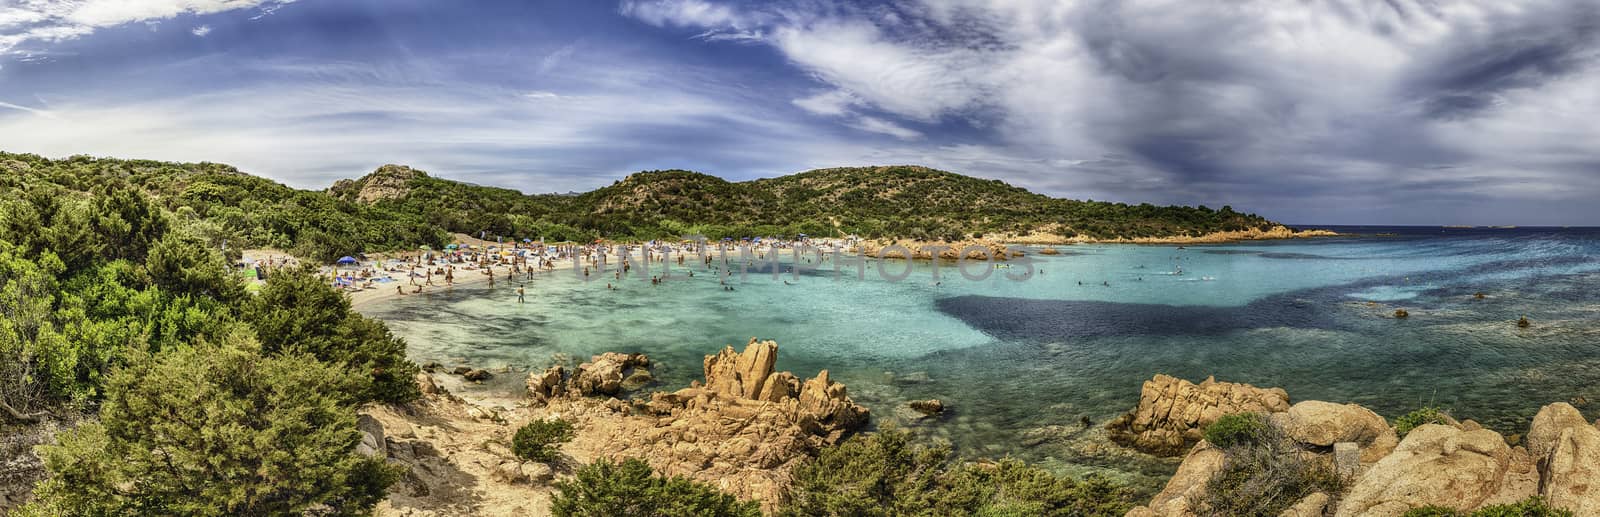 Panoramic view of Spiaggia del Principe, Sardinia, Italy by marcorubino